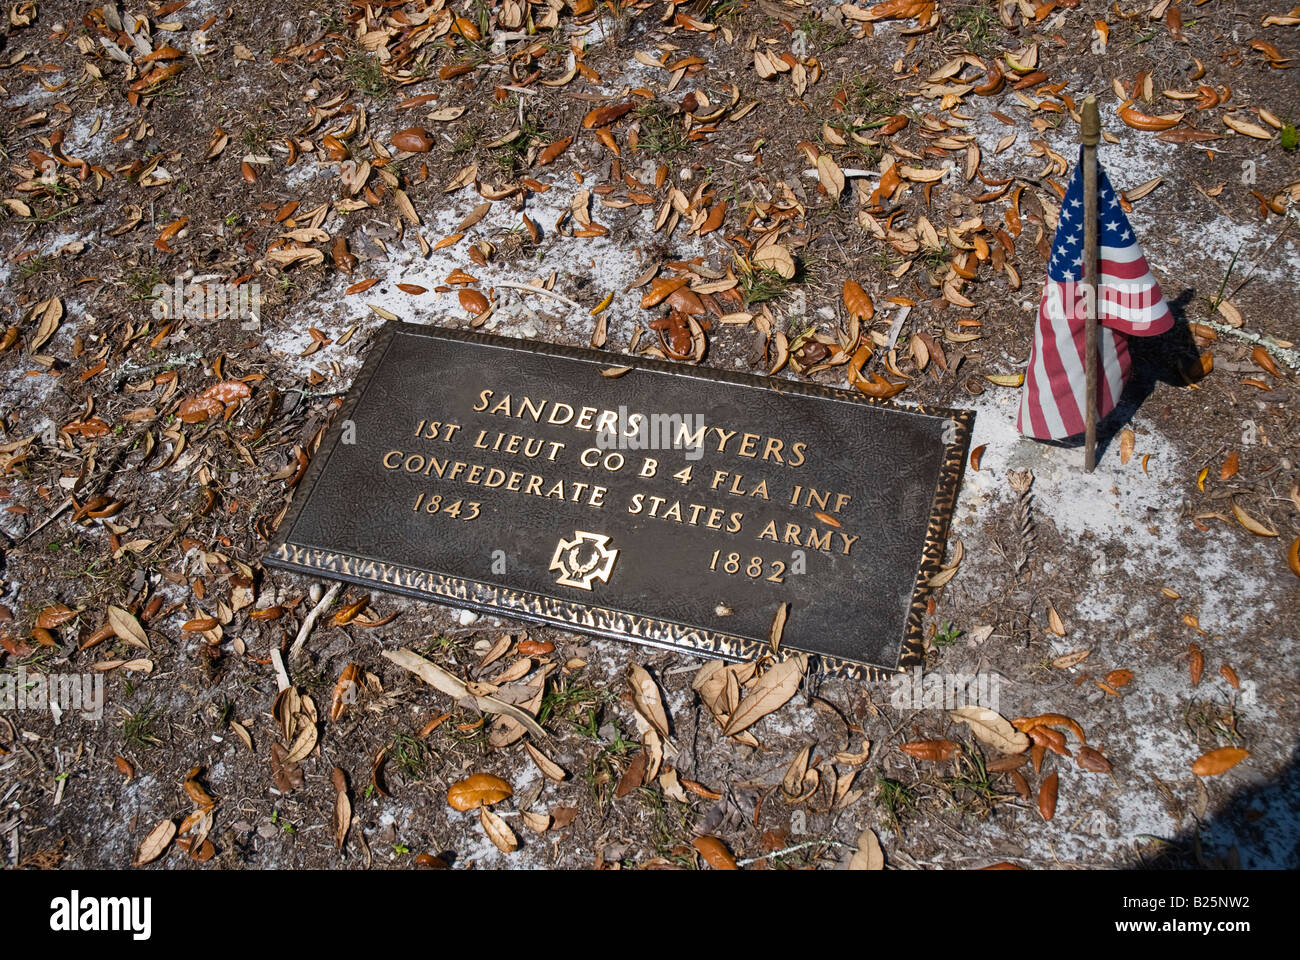 Cemetery Of Early Apalachicola Apalachicola Florida Stock Photo